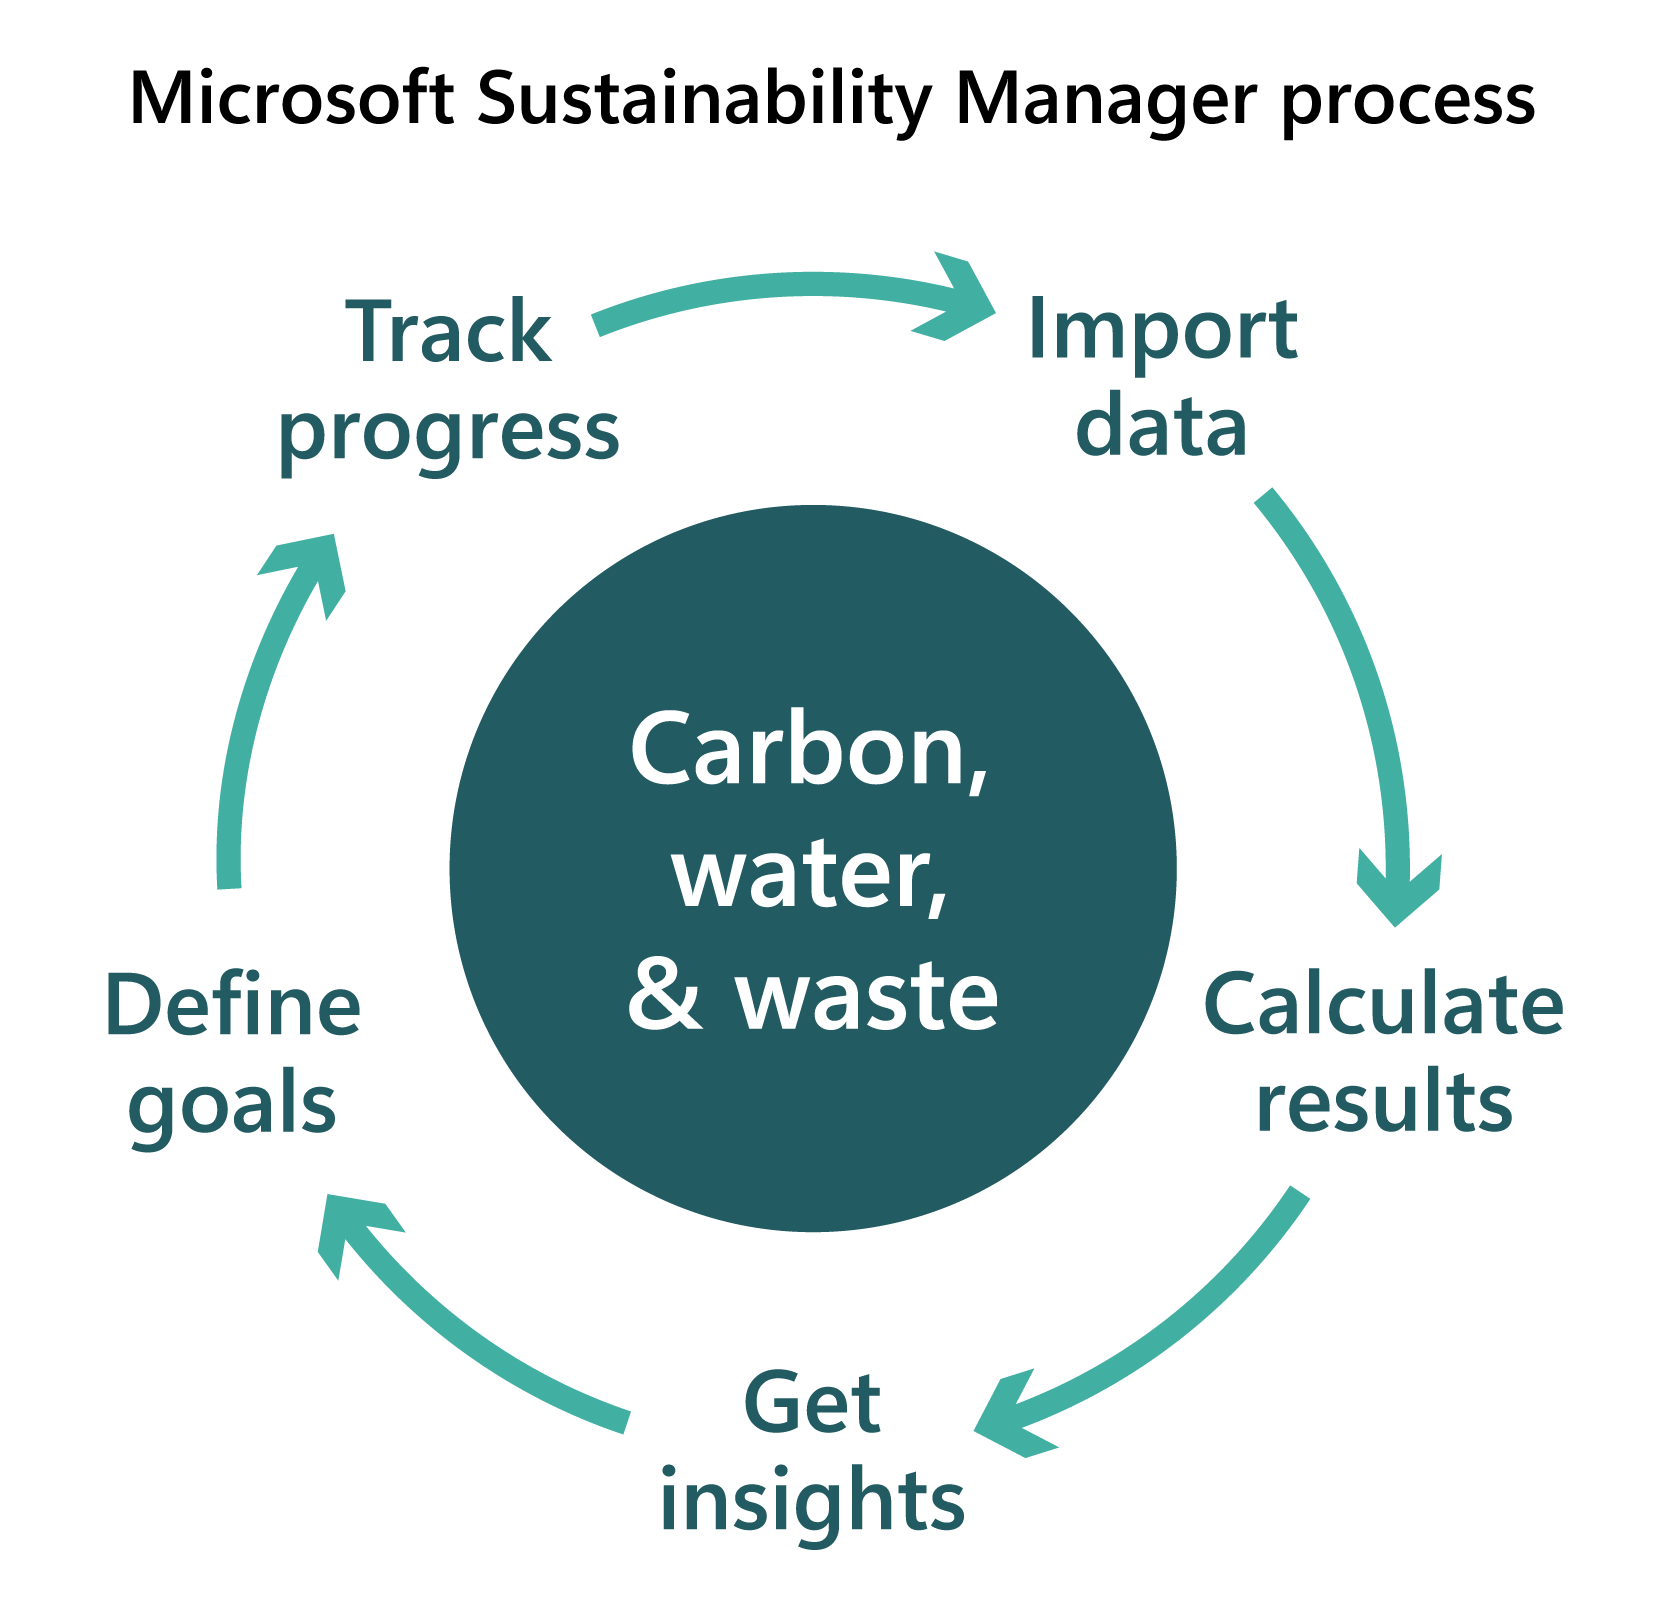 Et diagram, der viser den Microsoft Sustainability Manager-iterative proces fra dataimport til sporing for datakilde